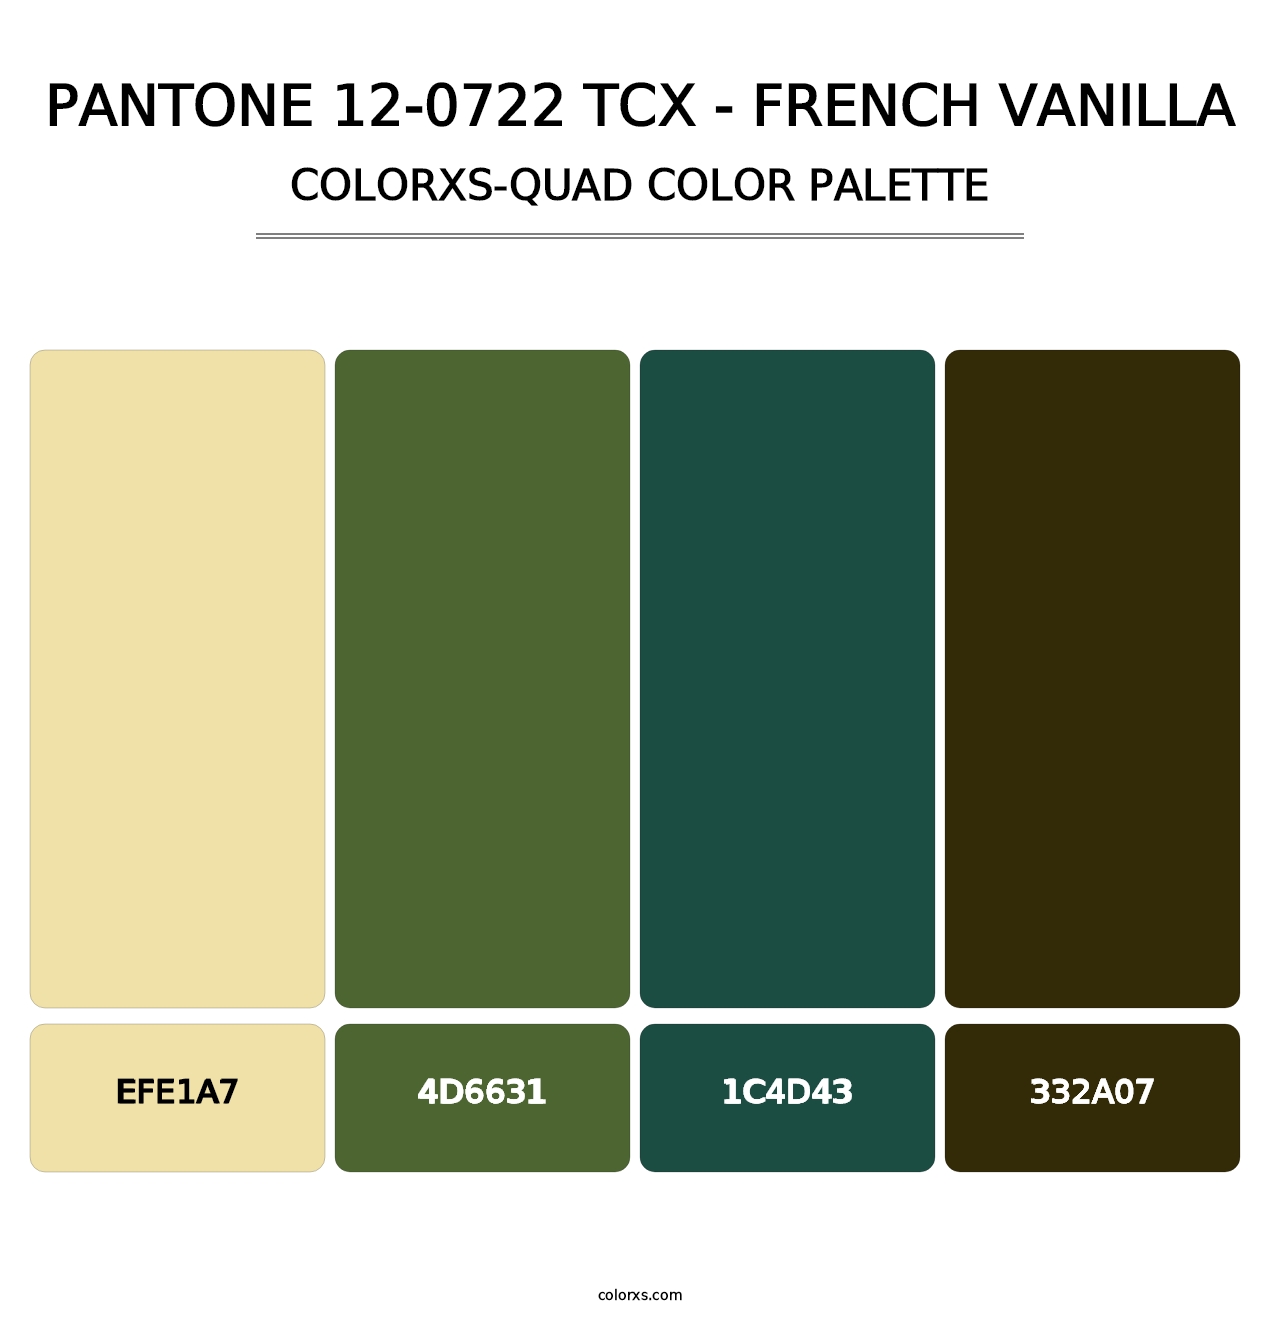 PANTONE 12-0722 TCX - French Vanilla - Colorxs Quad Palette